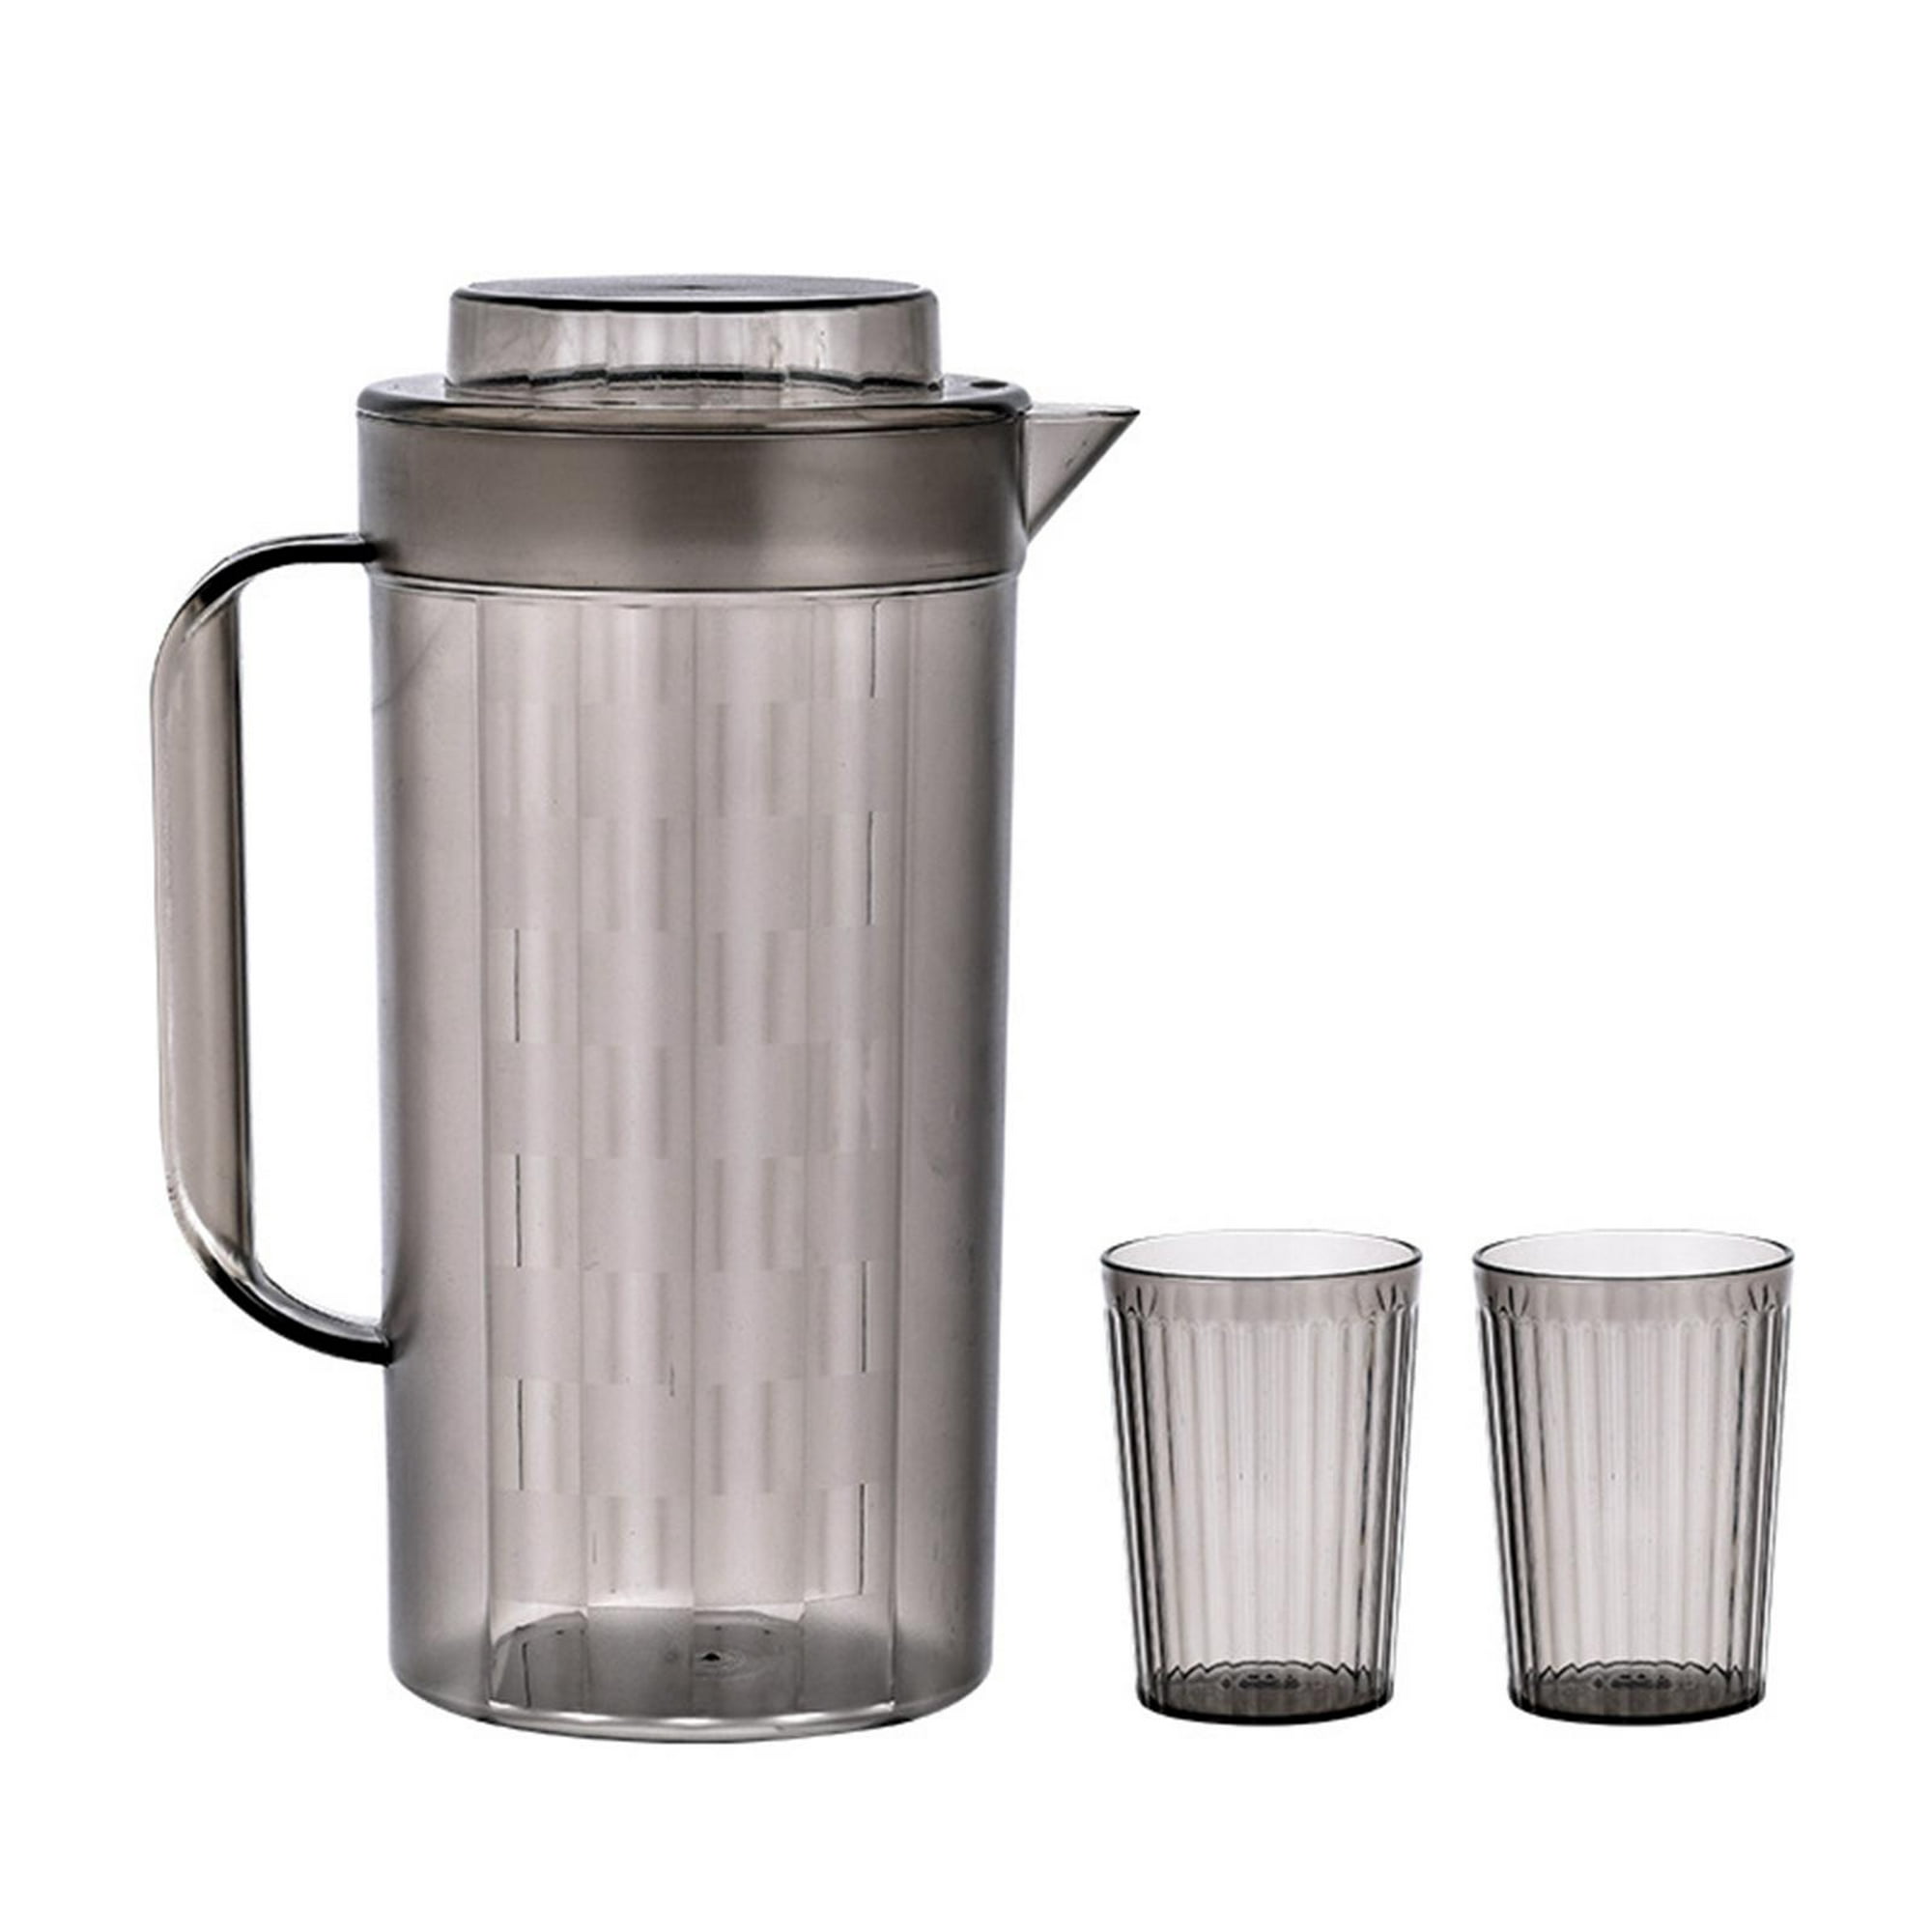  Jarra de agua, juego de jarra de vidrio, olla de agua  resistente al calor, tapa de acero inoxidable para hervir agua, té, jugo de  fruta, botella de vidrio, jarras de té